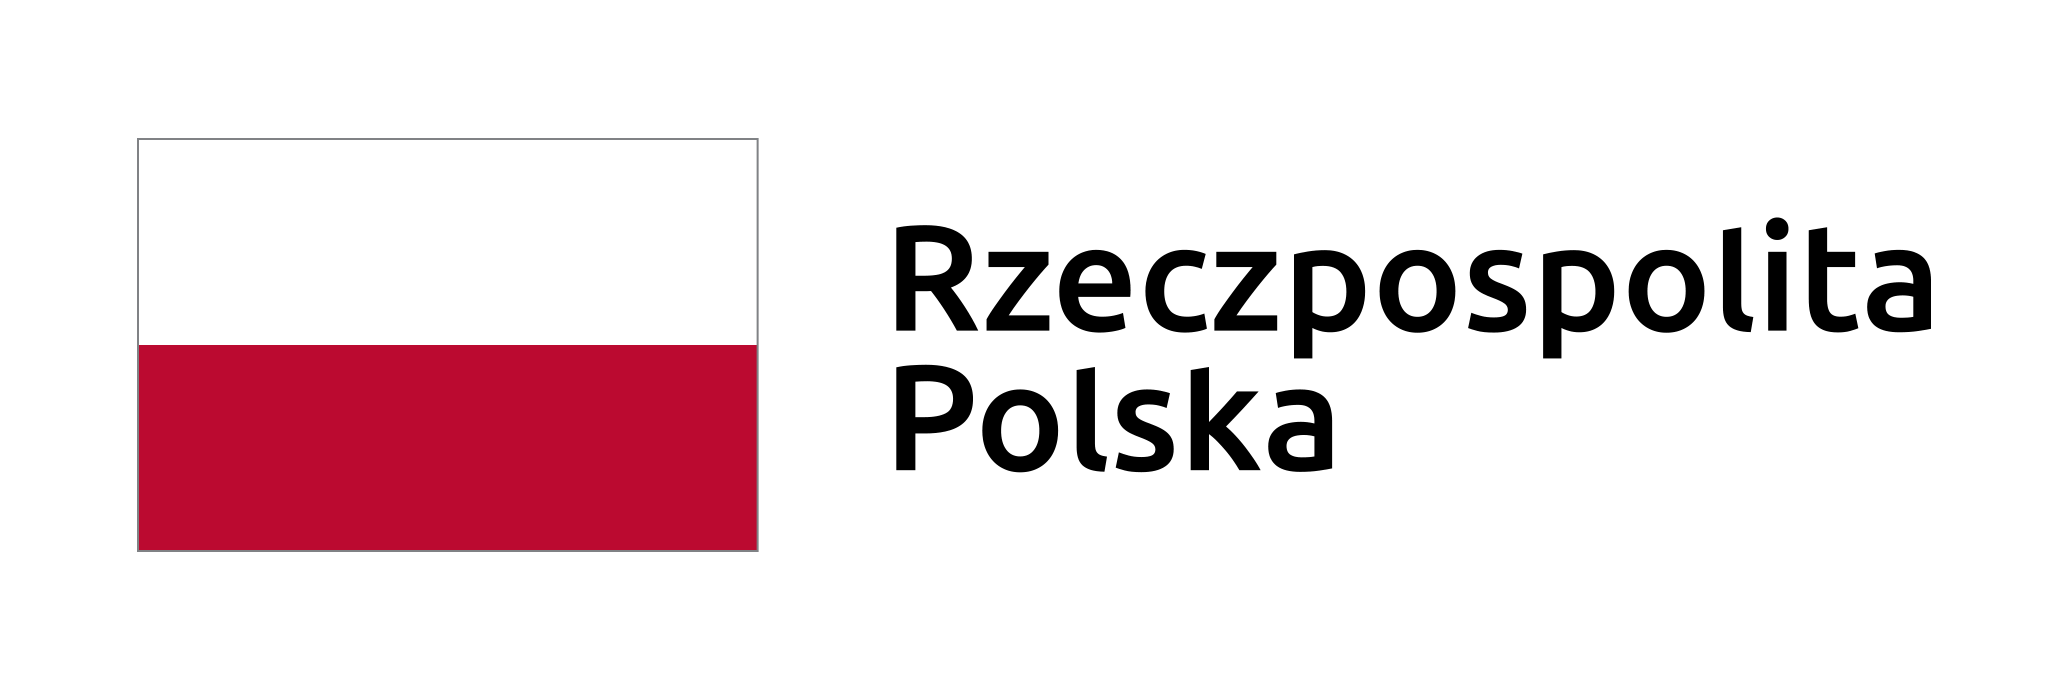 Flaga Polski, obok napis: Rzeczpospolita Polska